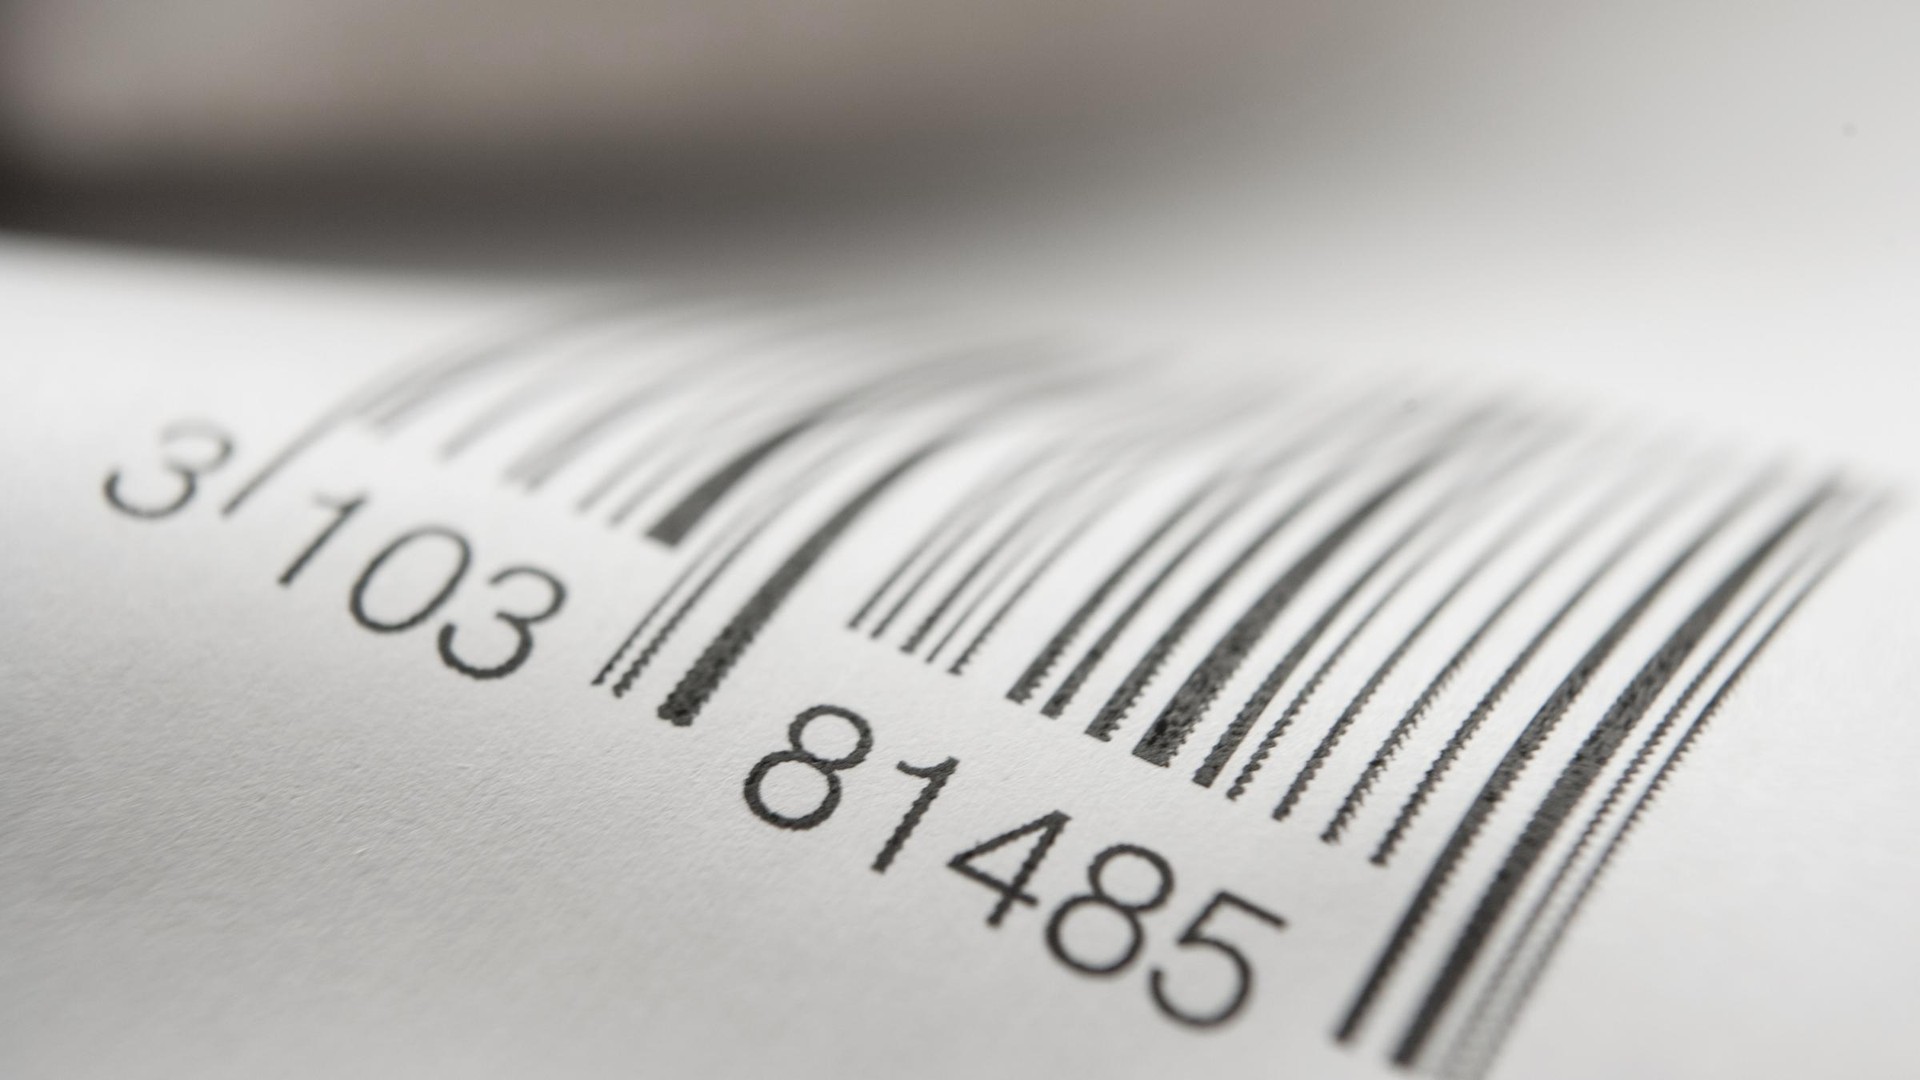 close up view of printed barcode